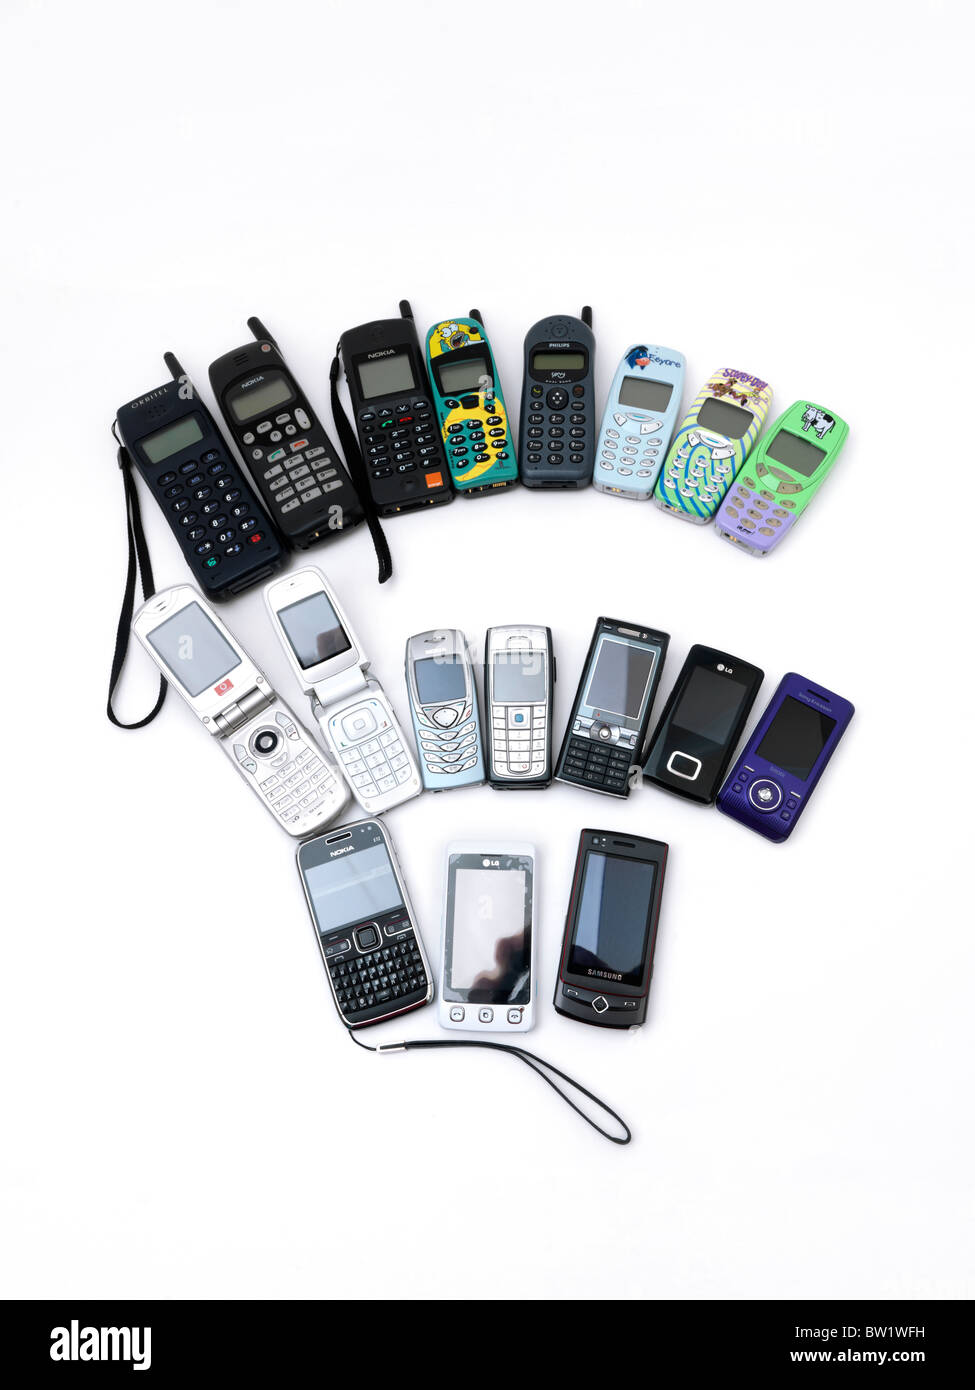 Vecchi e nuovi telefoni cellulari ventaglio NOKIA, LG, Samsung, Motorola, Phillips, Sony Ericsson Foto Stock